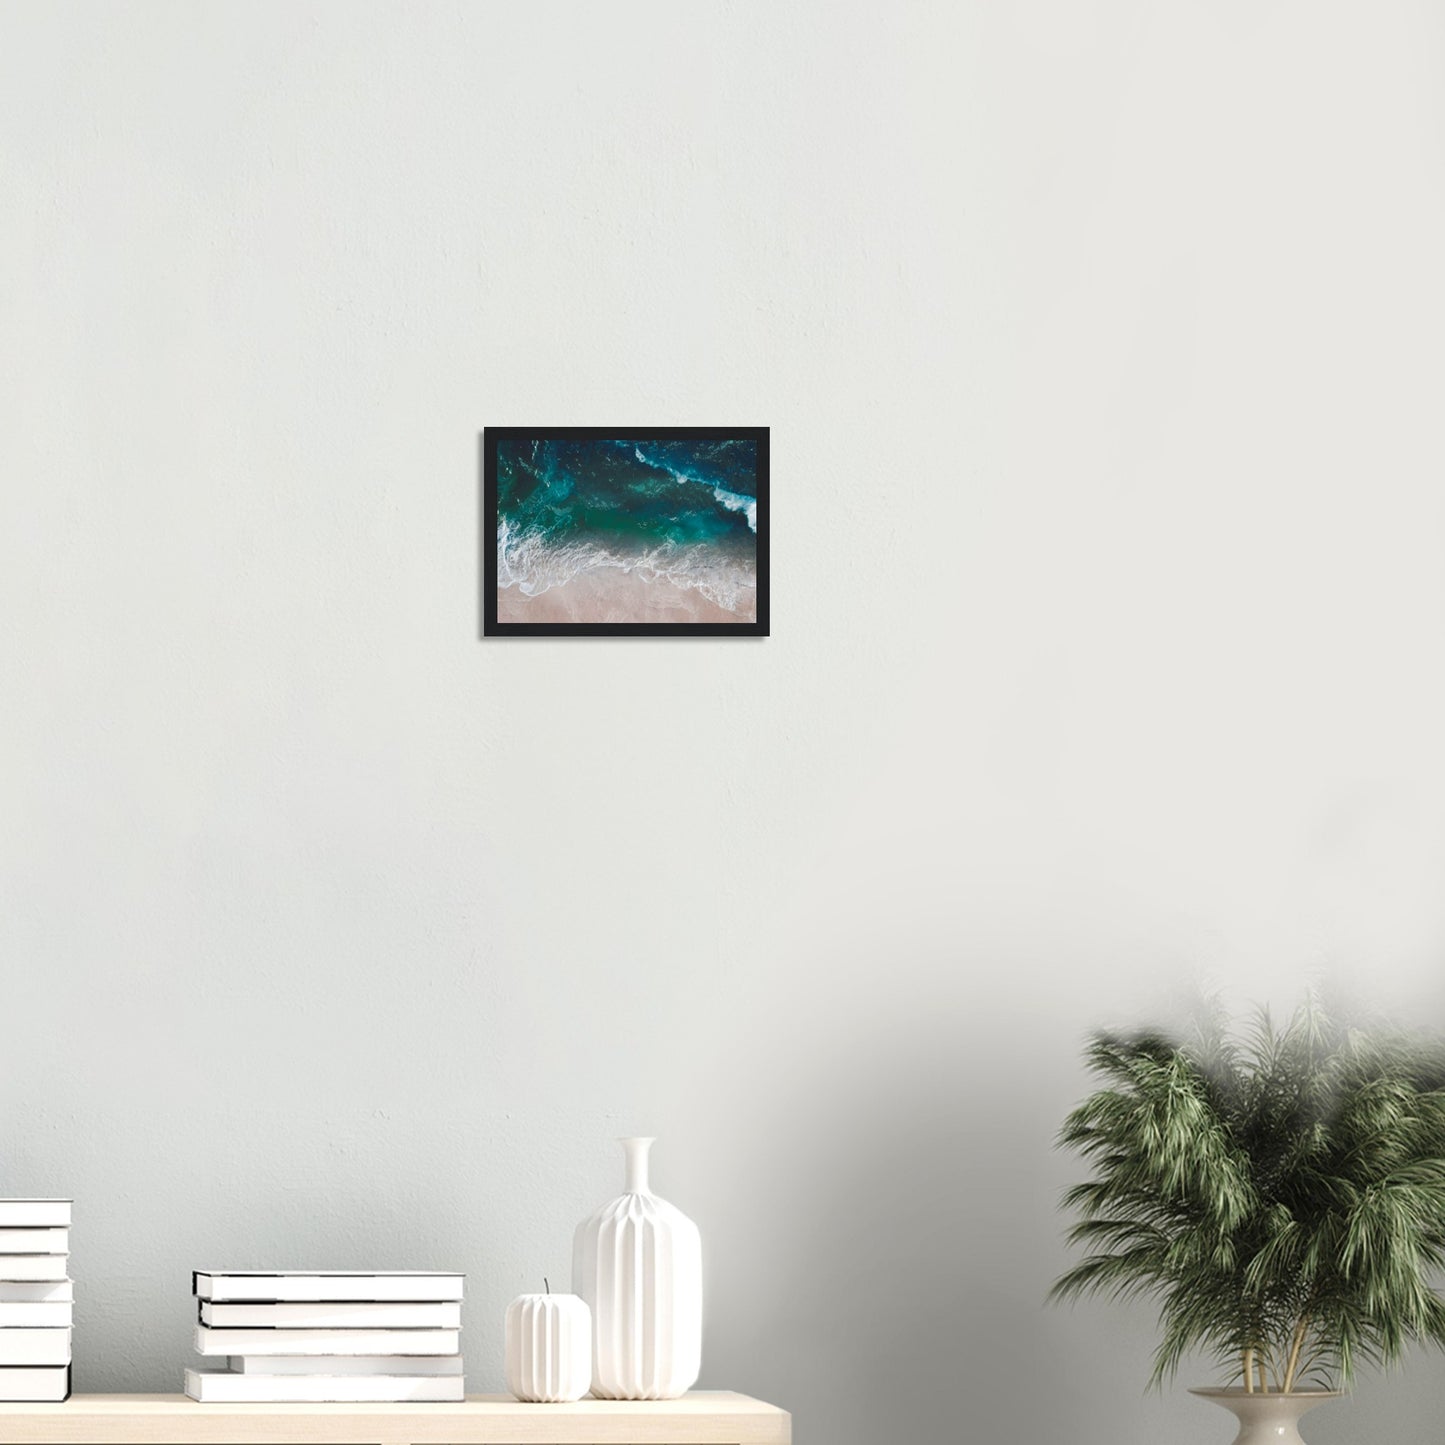 'Ocean View' wooden framed poster